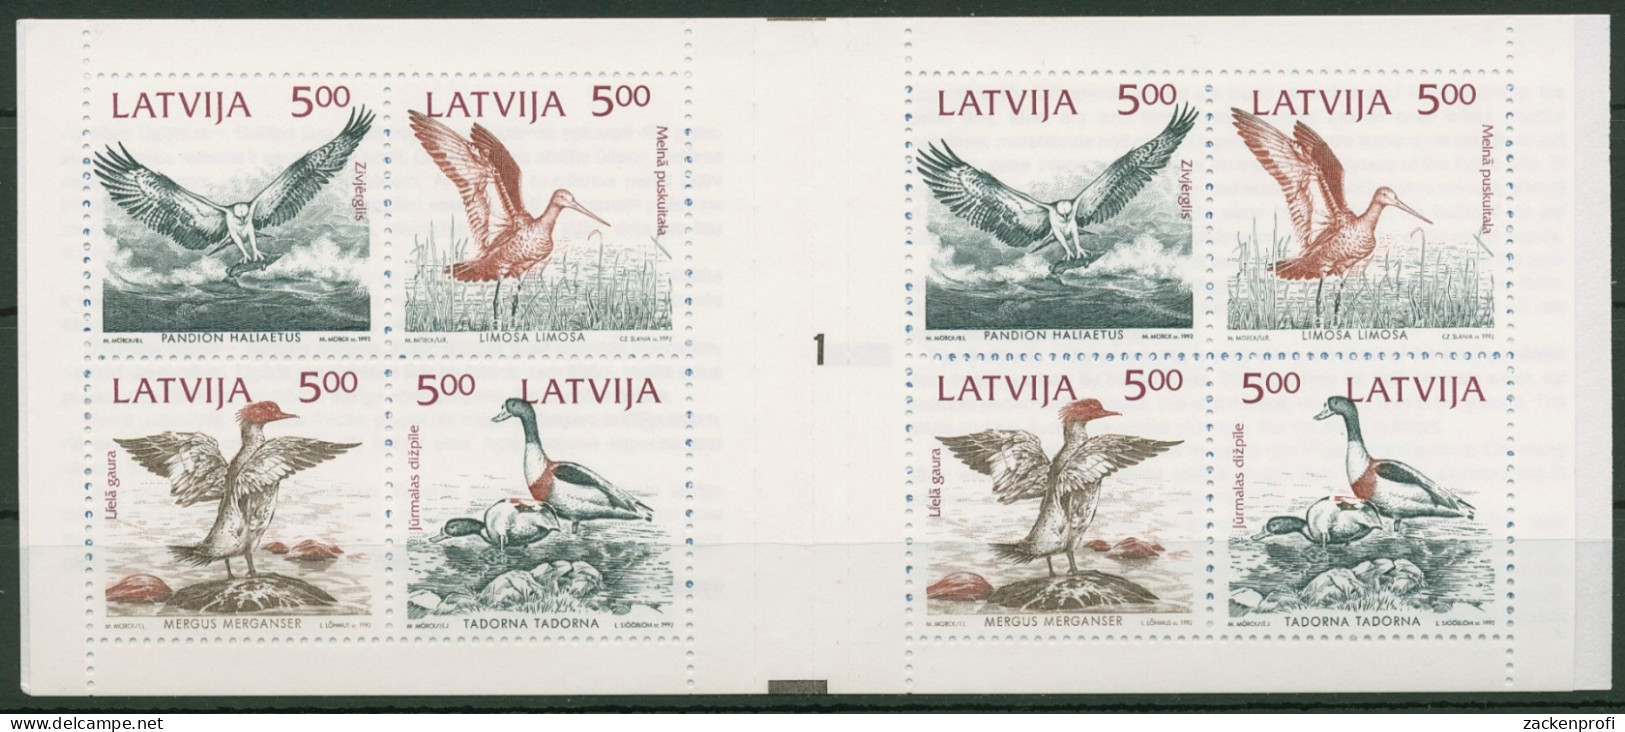 Lettland 1992 Naturschutz Ostsee Vögel MH 1 Postfrisch (C90183) - Letland